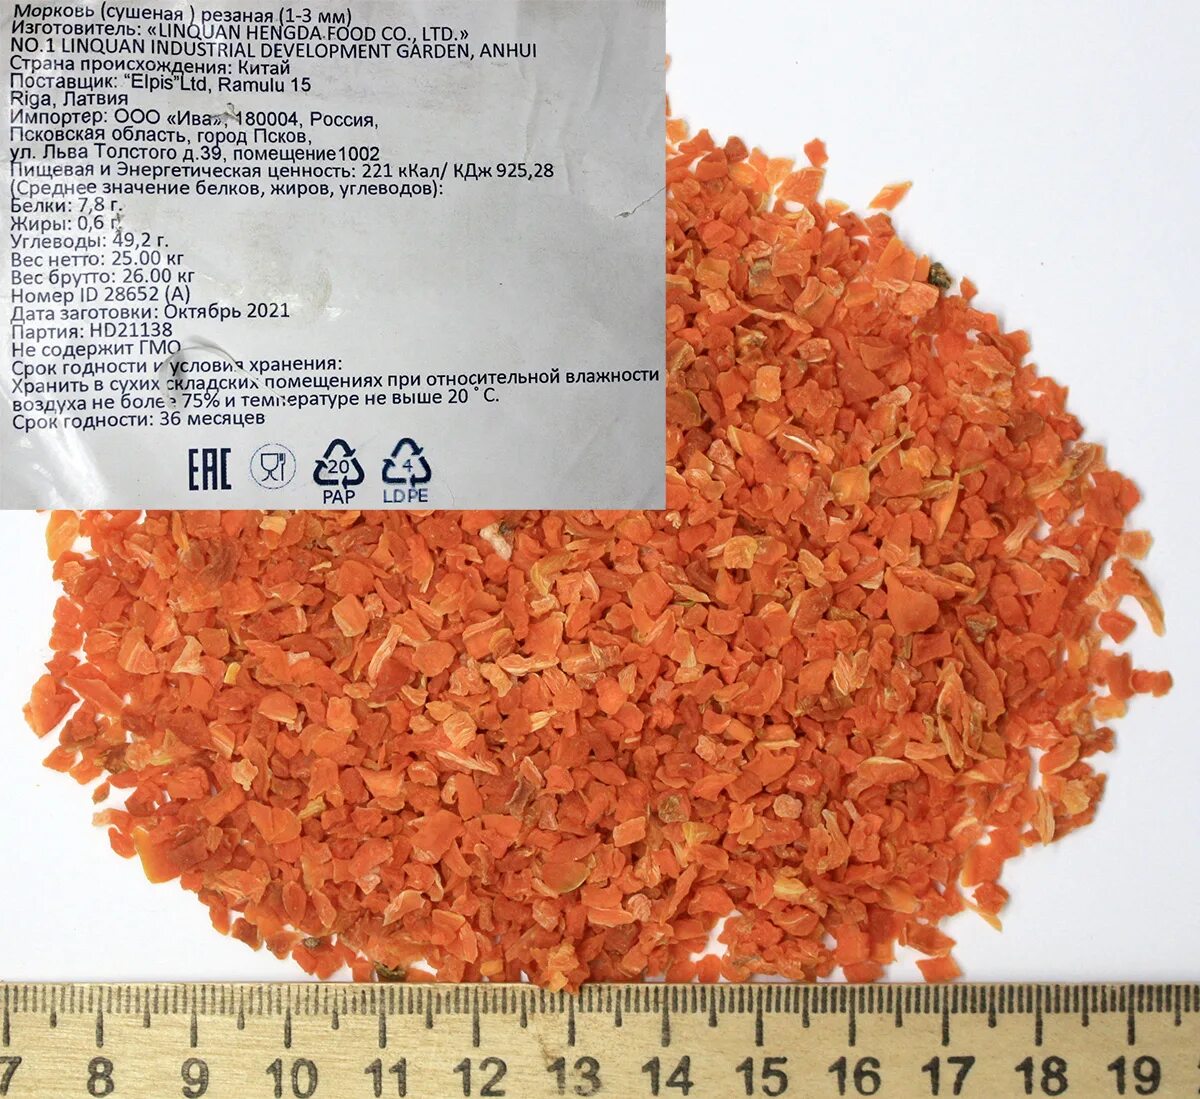 Морковь килокалории. Морковь сушеная, 1-3 мм. Сушеная морковка. Морковь сушёная. Этикетка морковь сушеная.